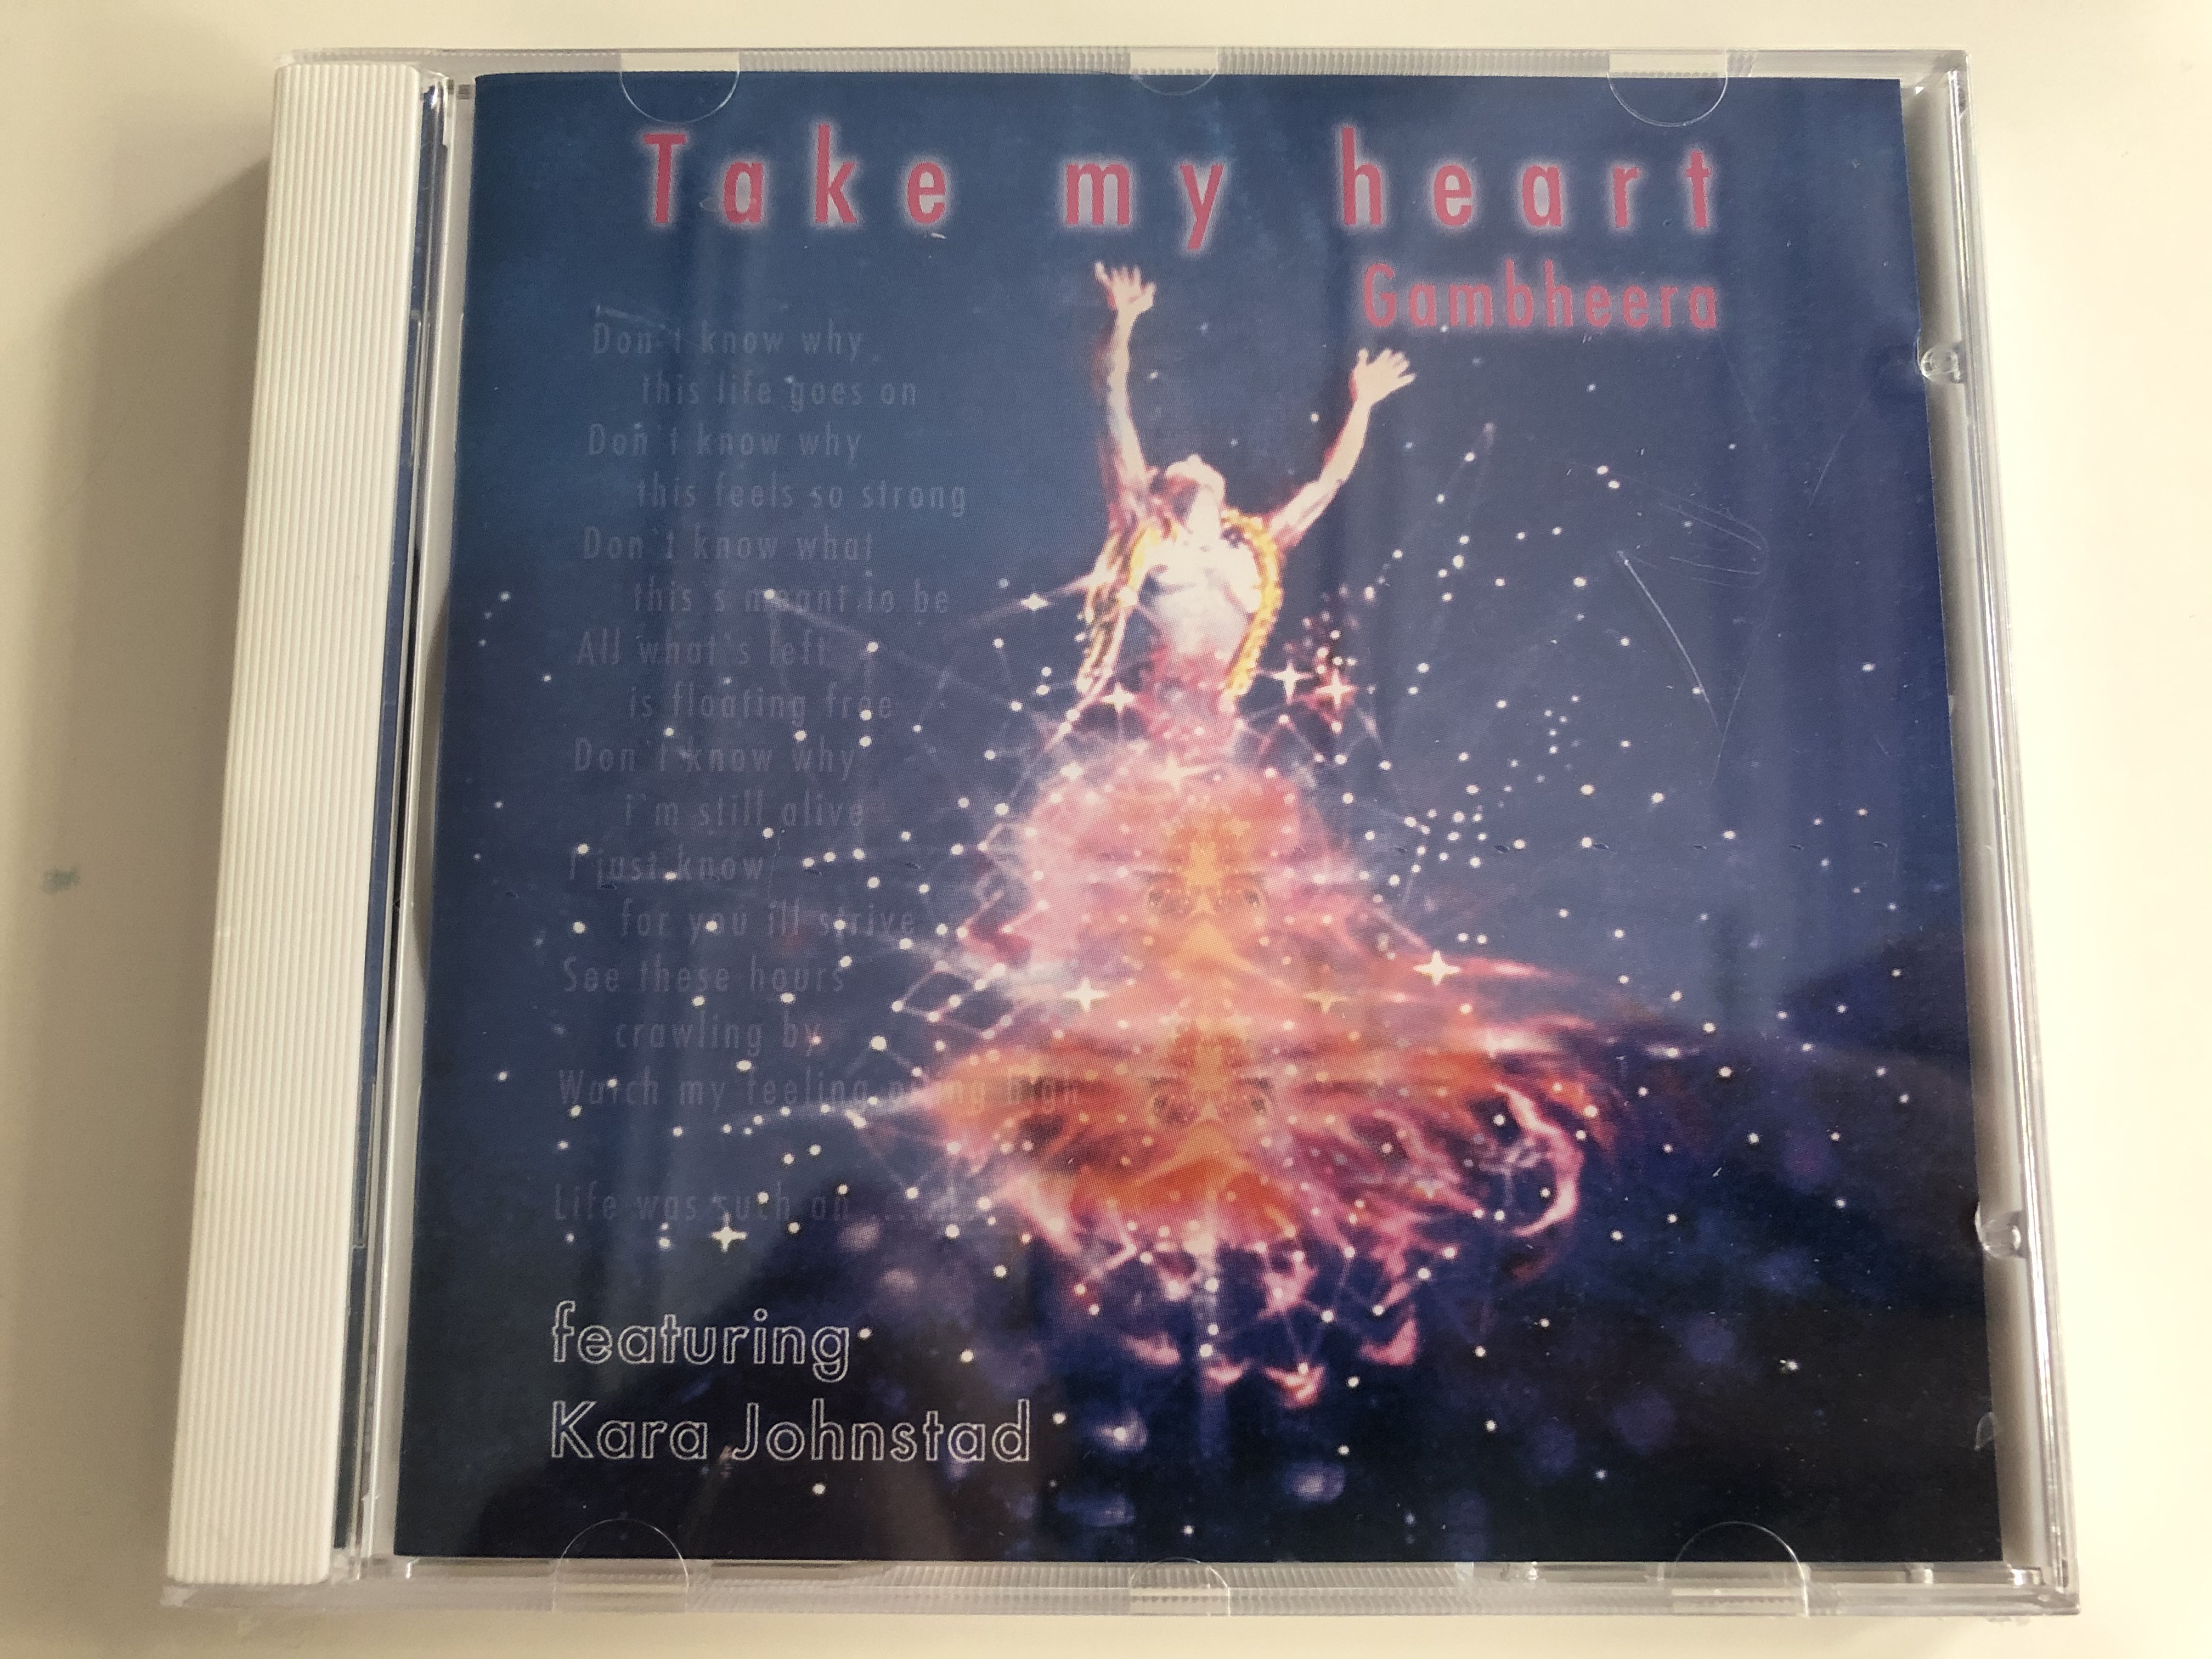 take-my-heart-gambheera-featuring-kara-johnstad-meistersinger-musik-audio-cd-ngh-cd-425-e-1-.jpg